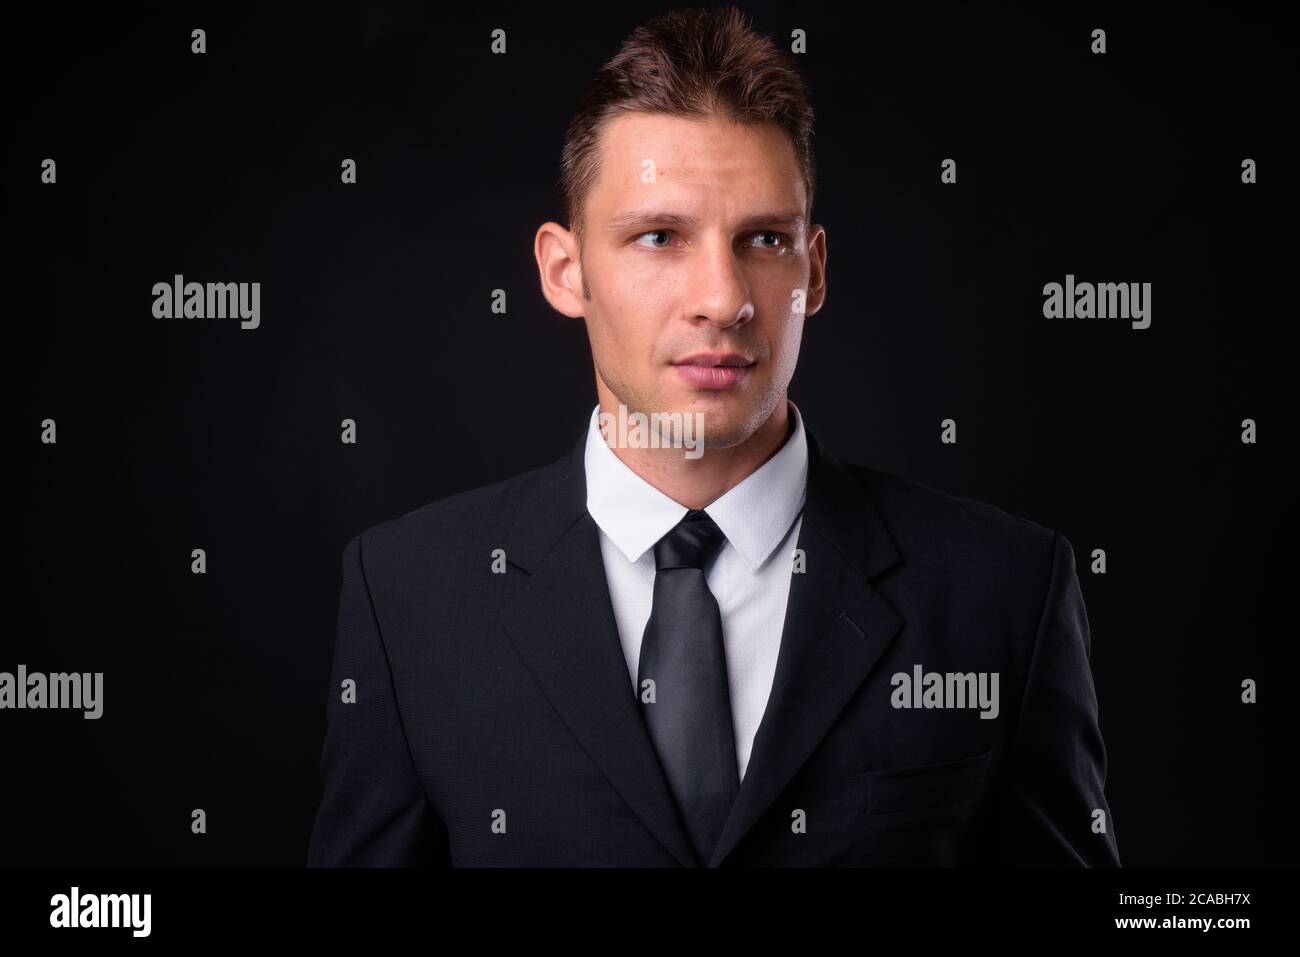 Portrait of businessman in suit against black background Stock Photo